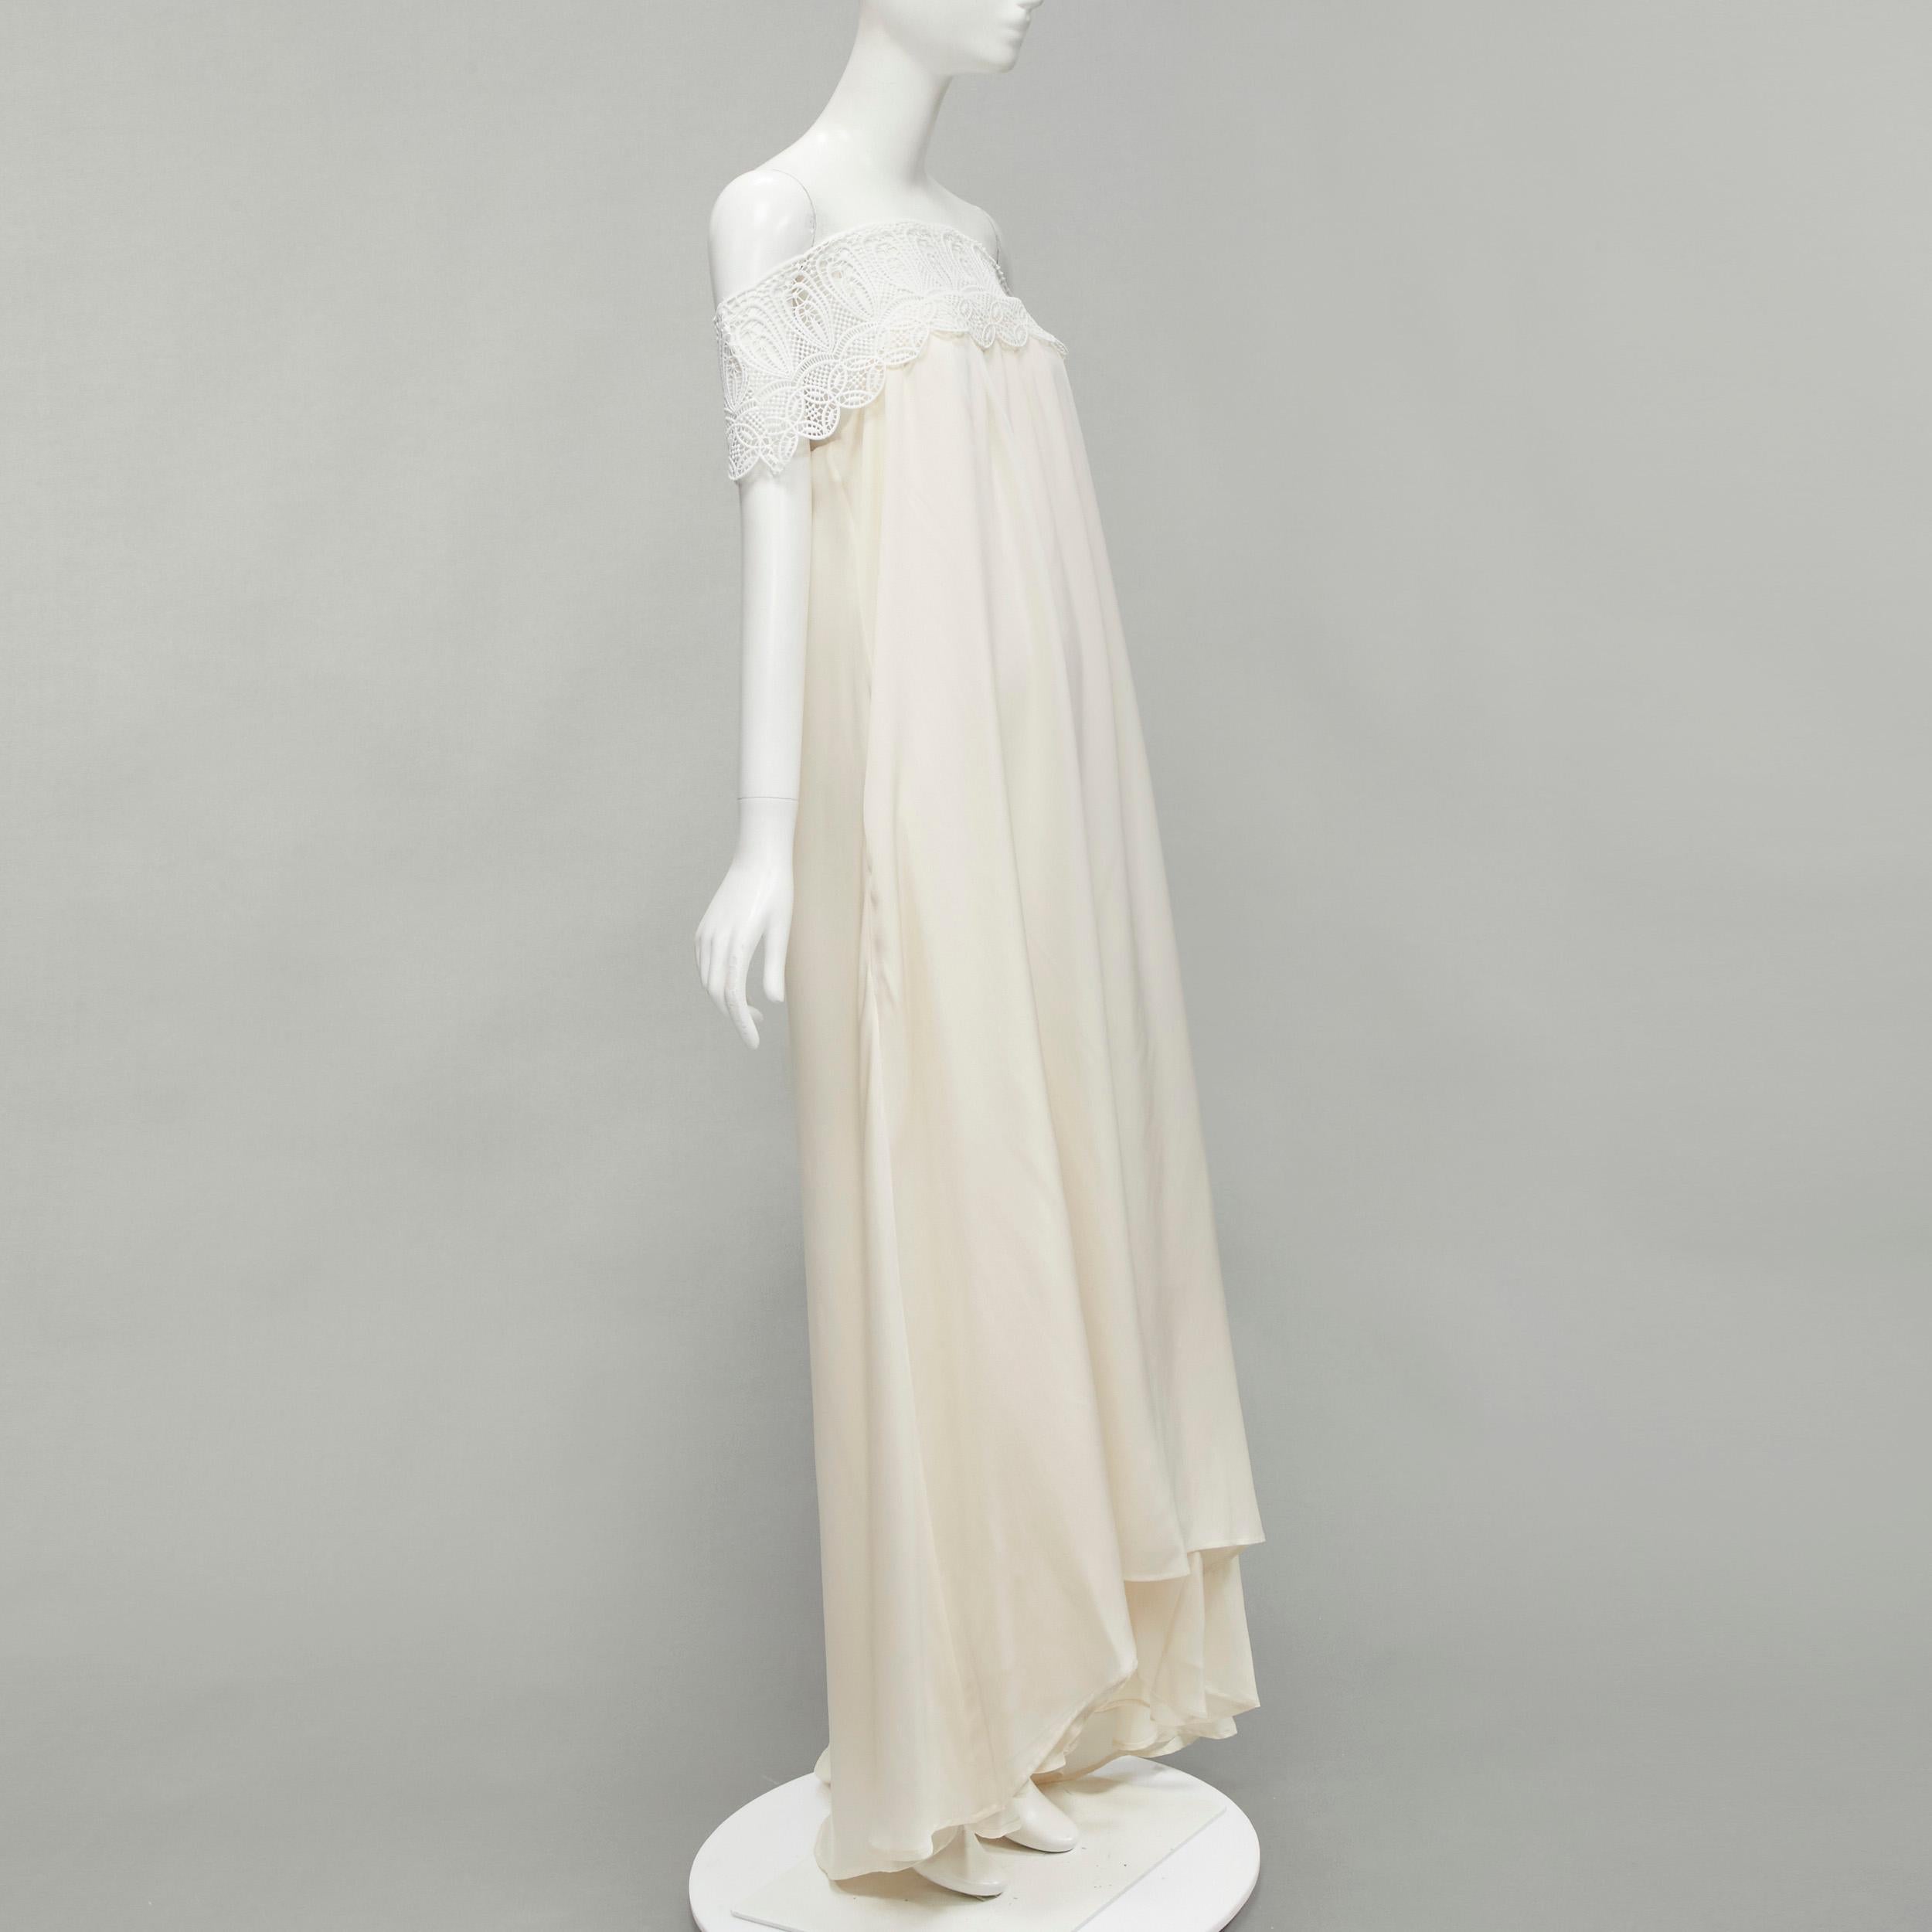 Gray new SELF PORTRAIT cream lace detail off shoulder wedding dress UK10 M For Sale